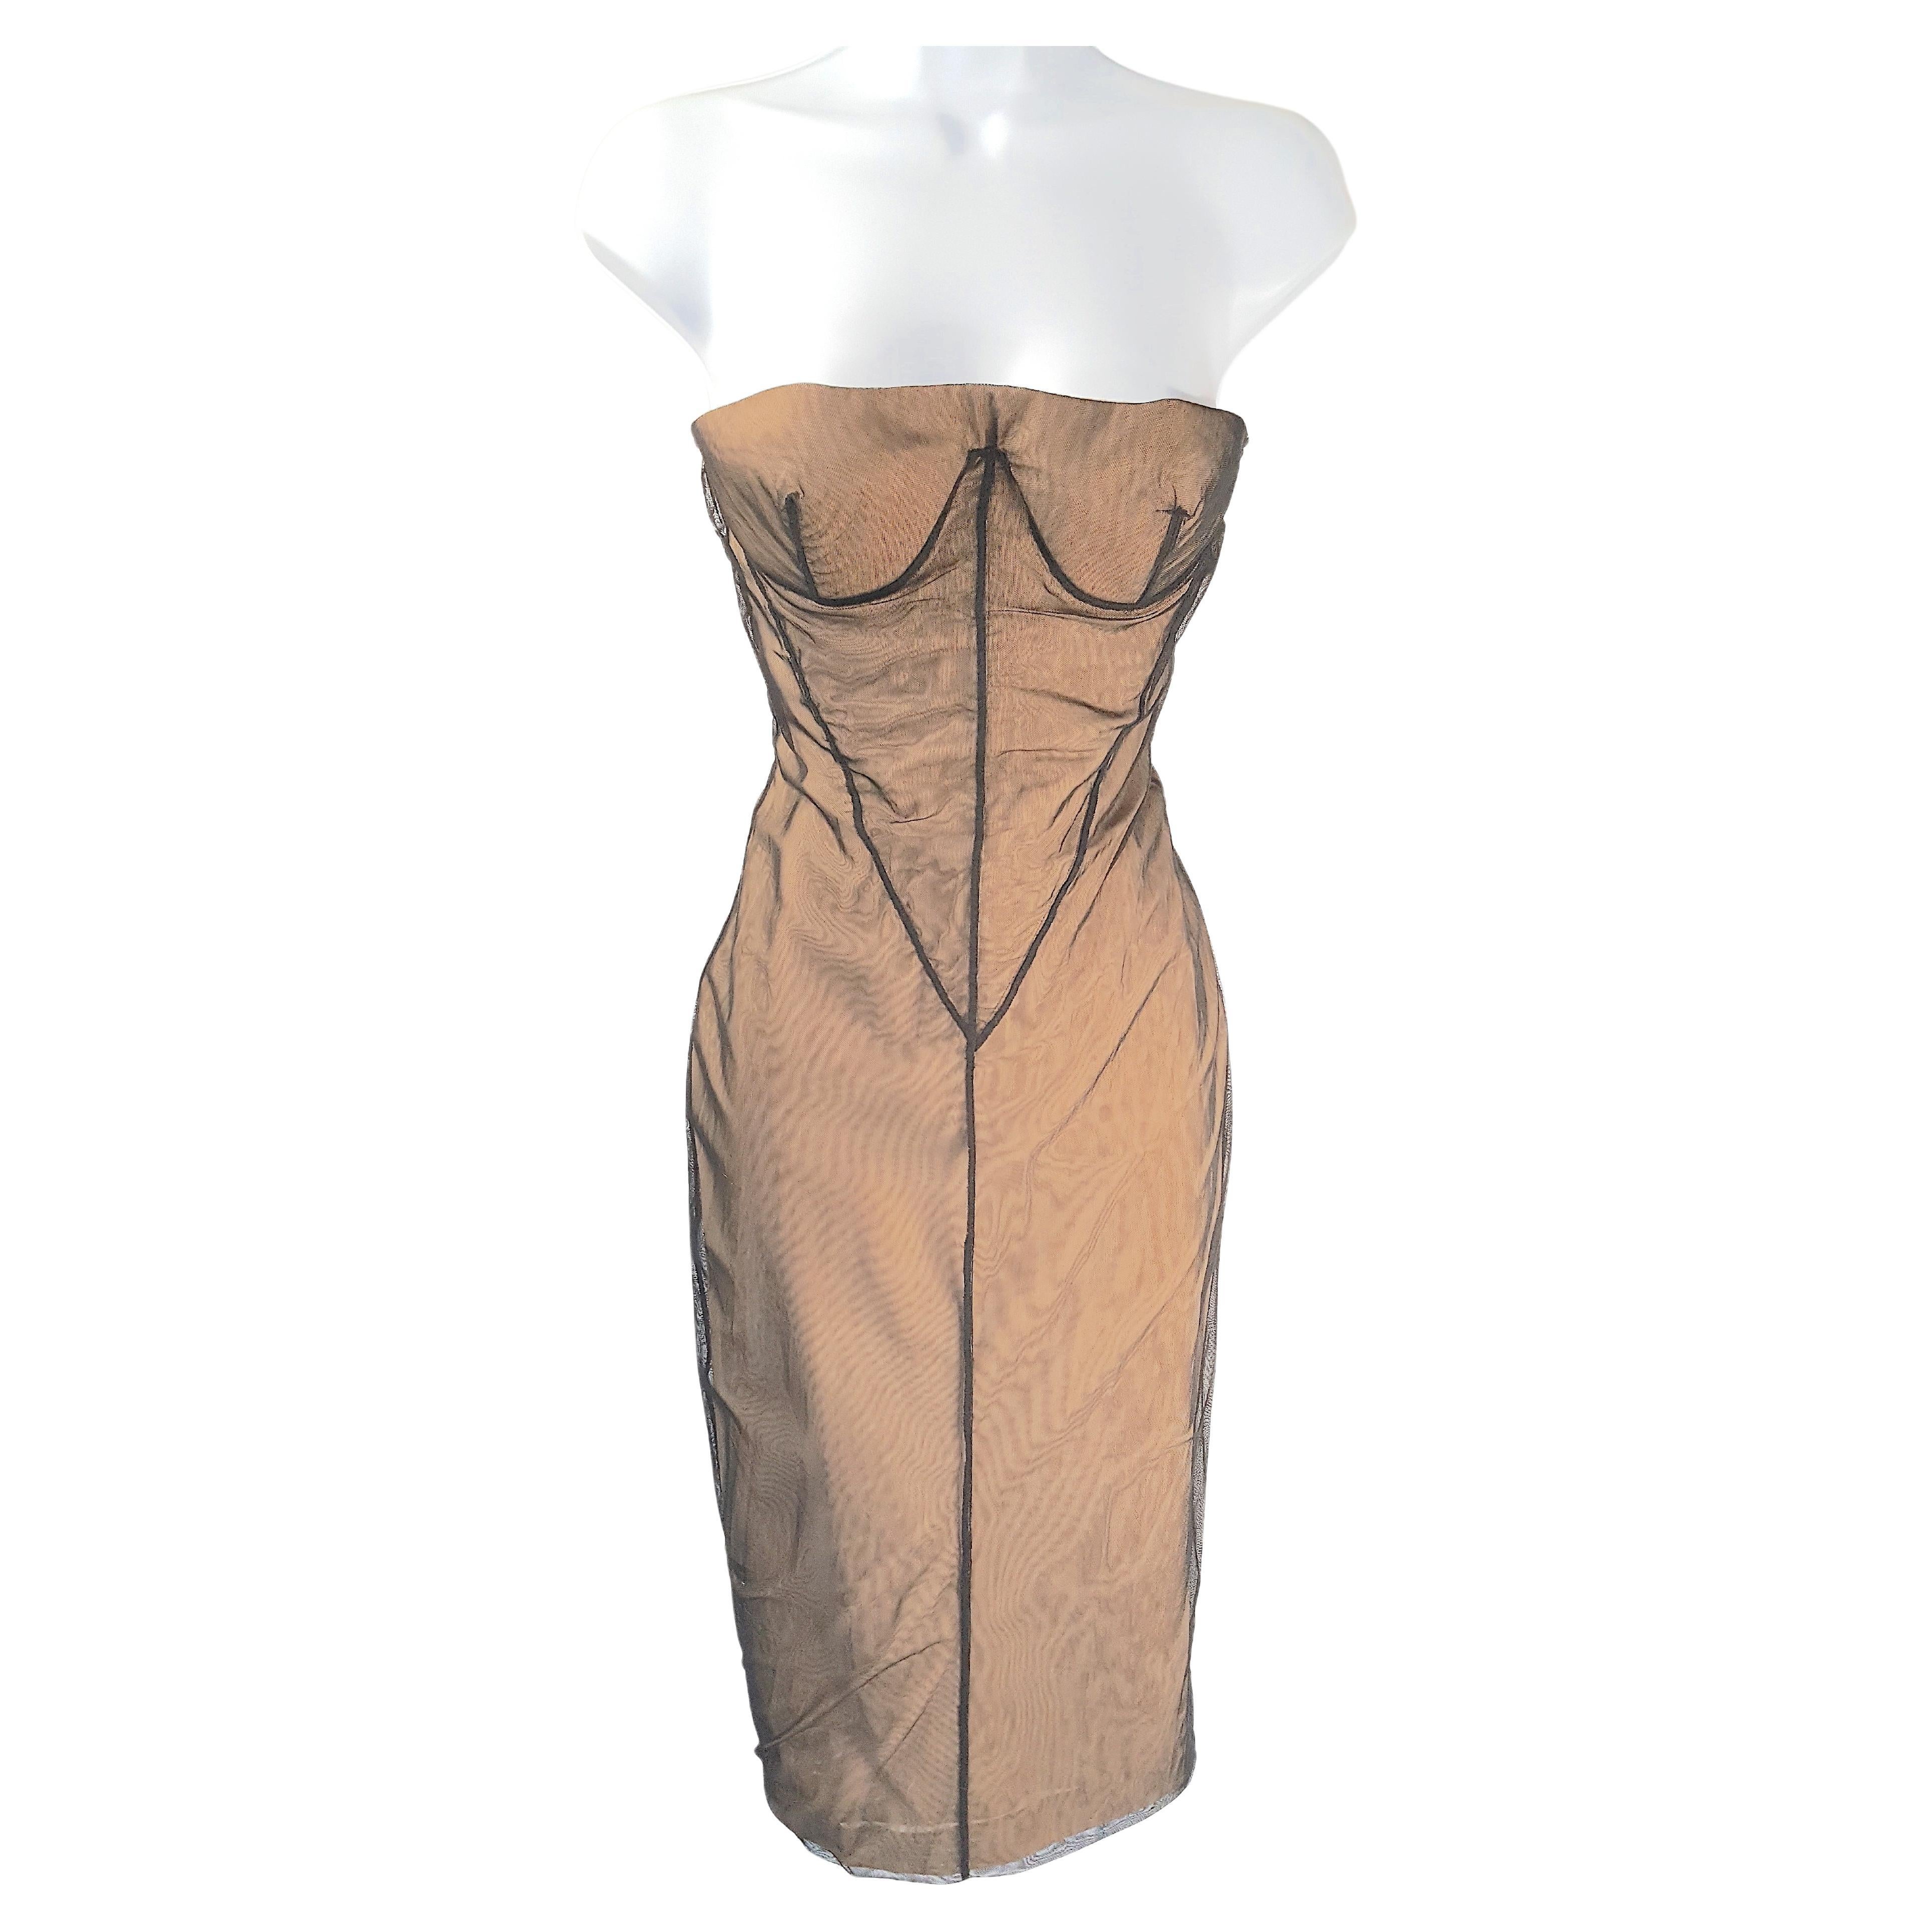 Gucci TomFord 2001 AwardYear RunwayLook2 Balconette Korsett trägerloses nudefarbenes Kleid mit Korsett im Angebot